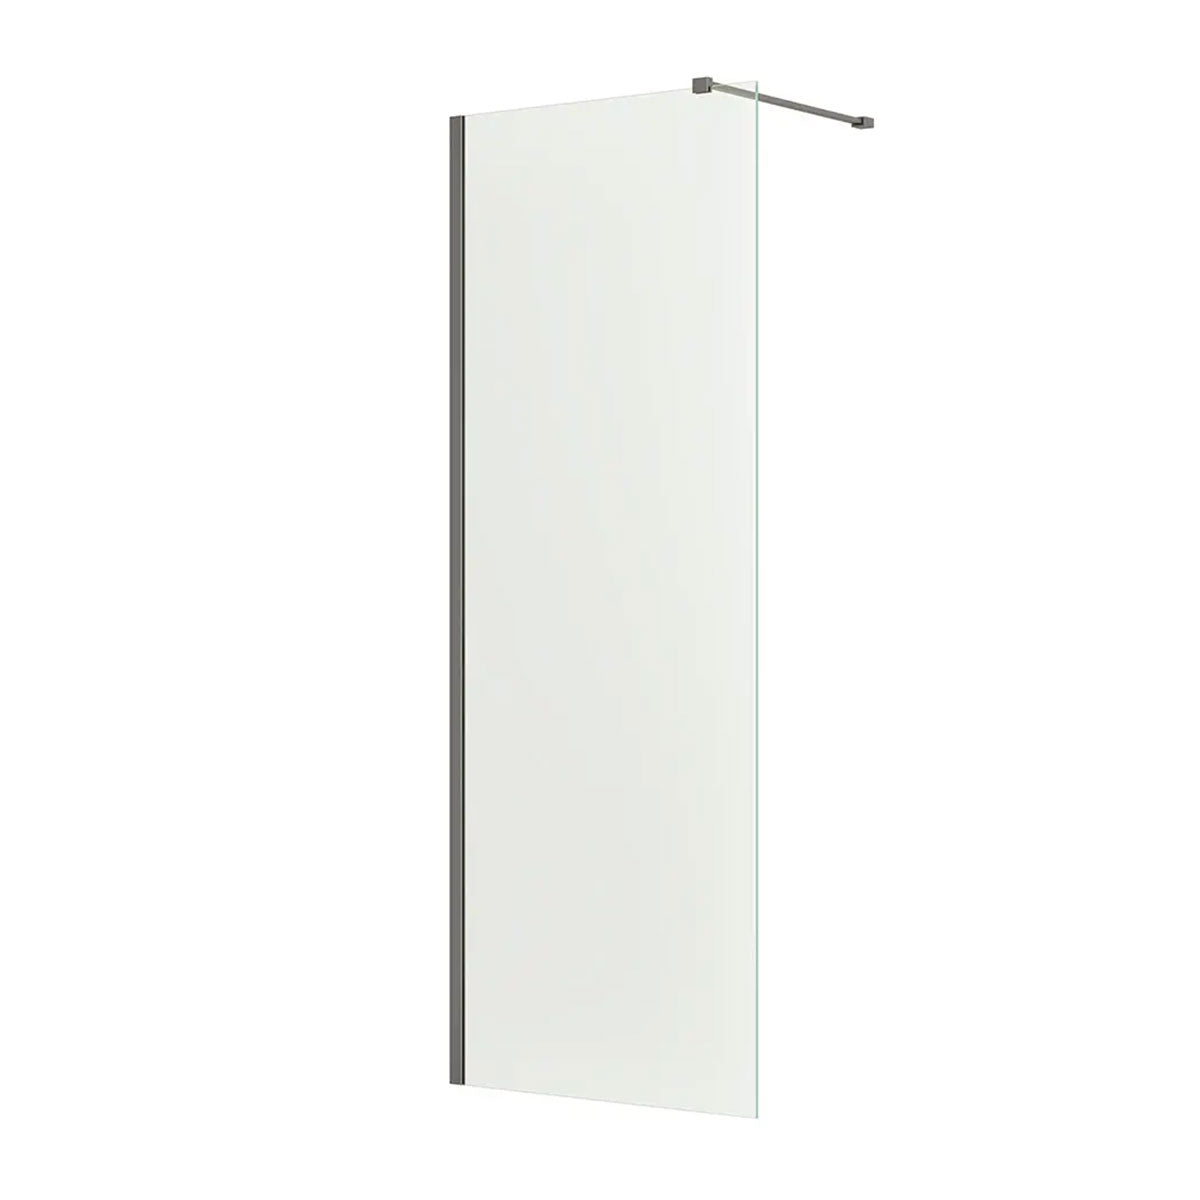 Granlusso 8 Clear Glass Wetroom Shower Screen - Gunmetal